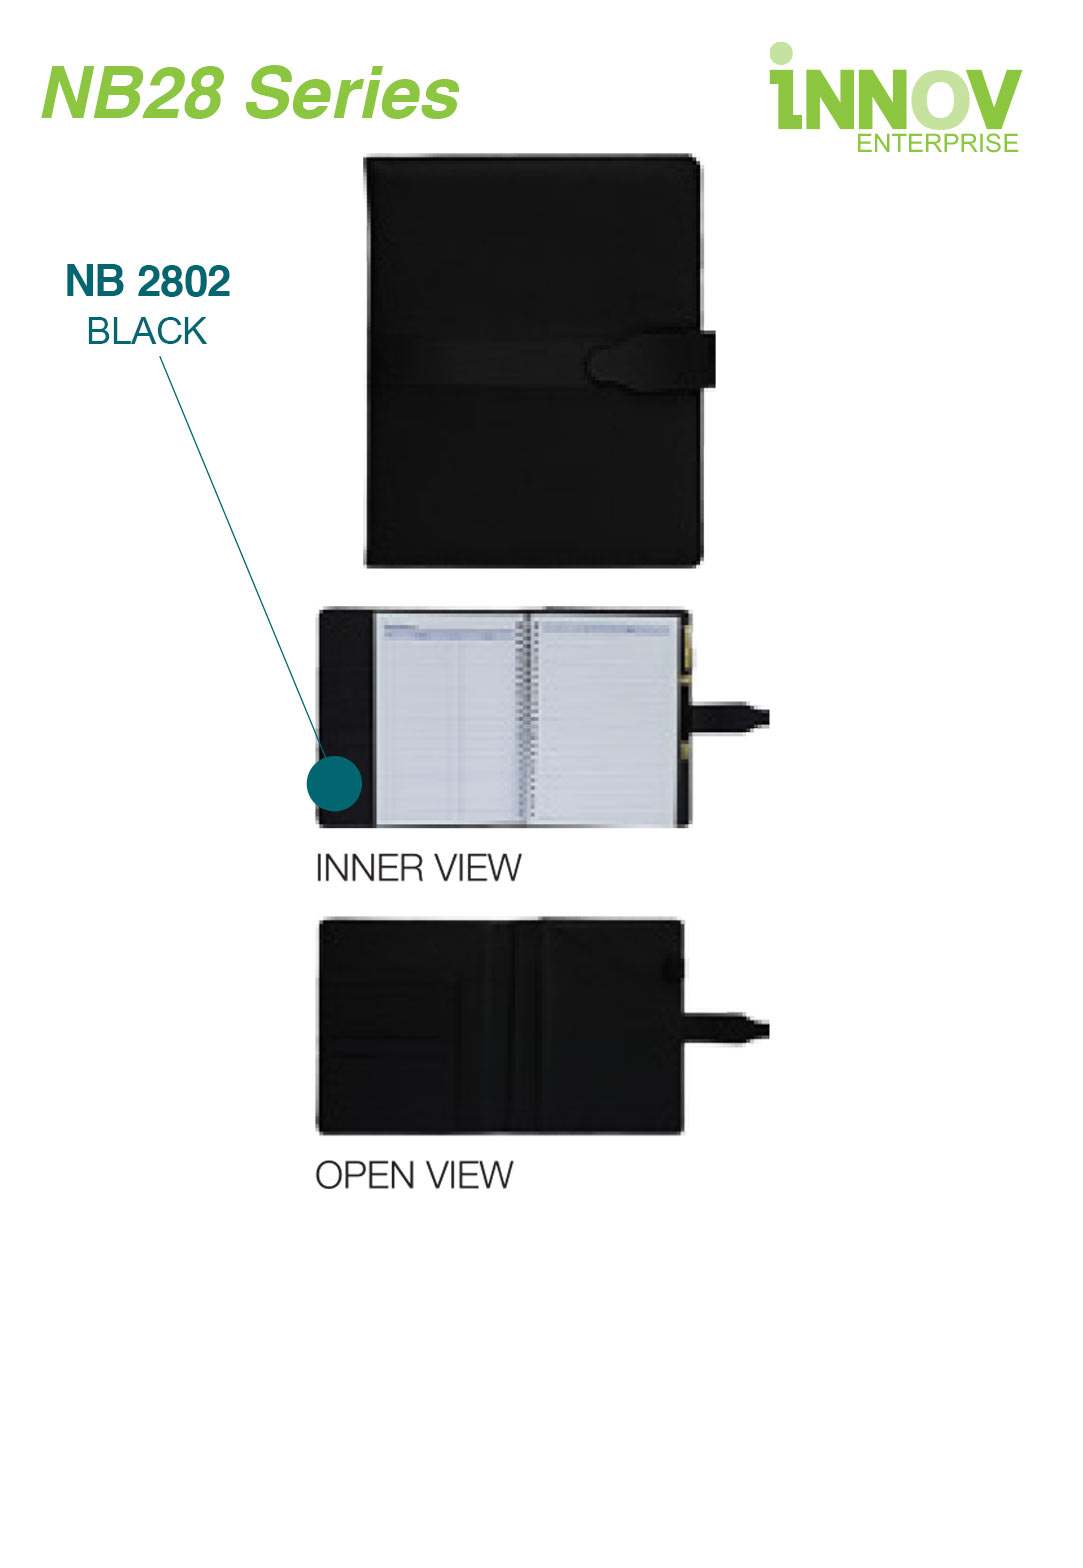 NotePad NB28 Series - Innov Enterprise | Online Printing Shop  T-Shirts   Gifts Service Provider